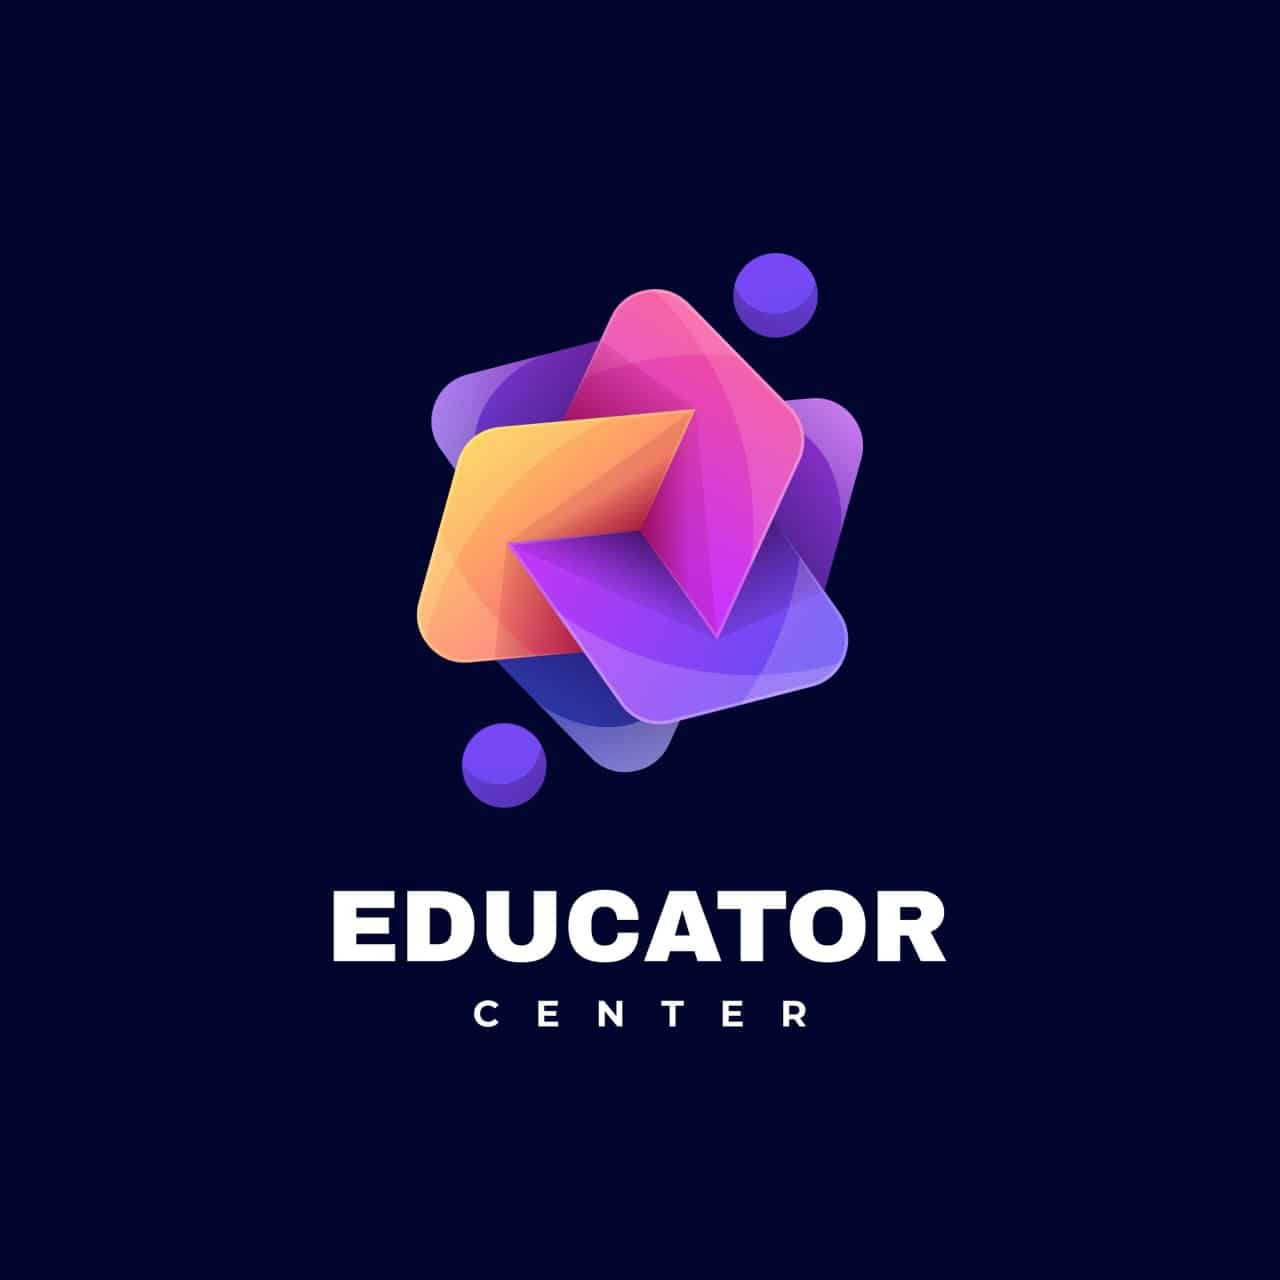 Educator logo